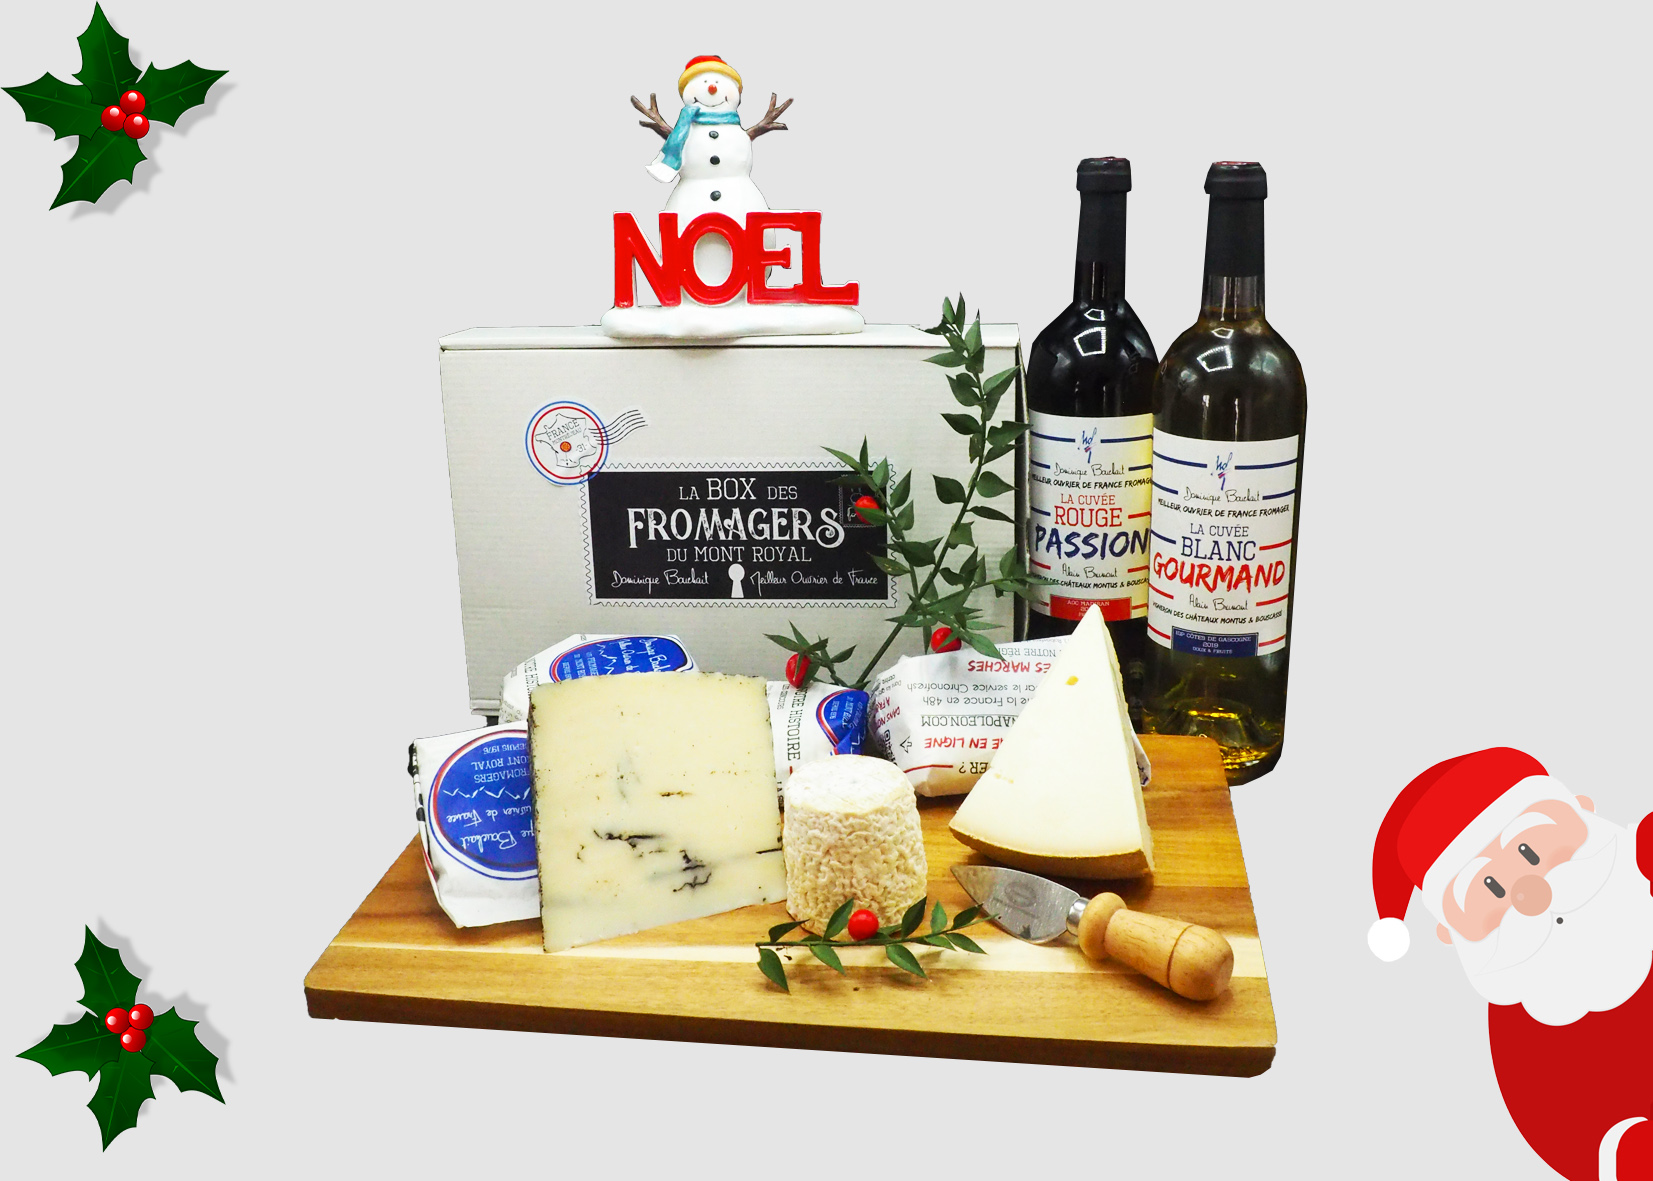 box-noel-fromage-napoleon-mof-vin-pyrenees copie